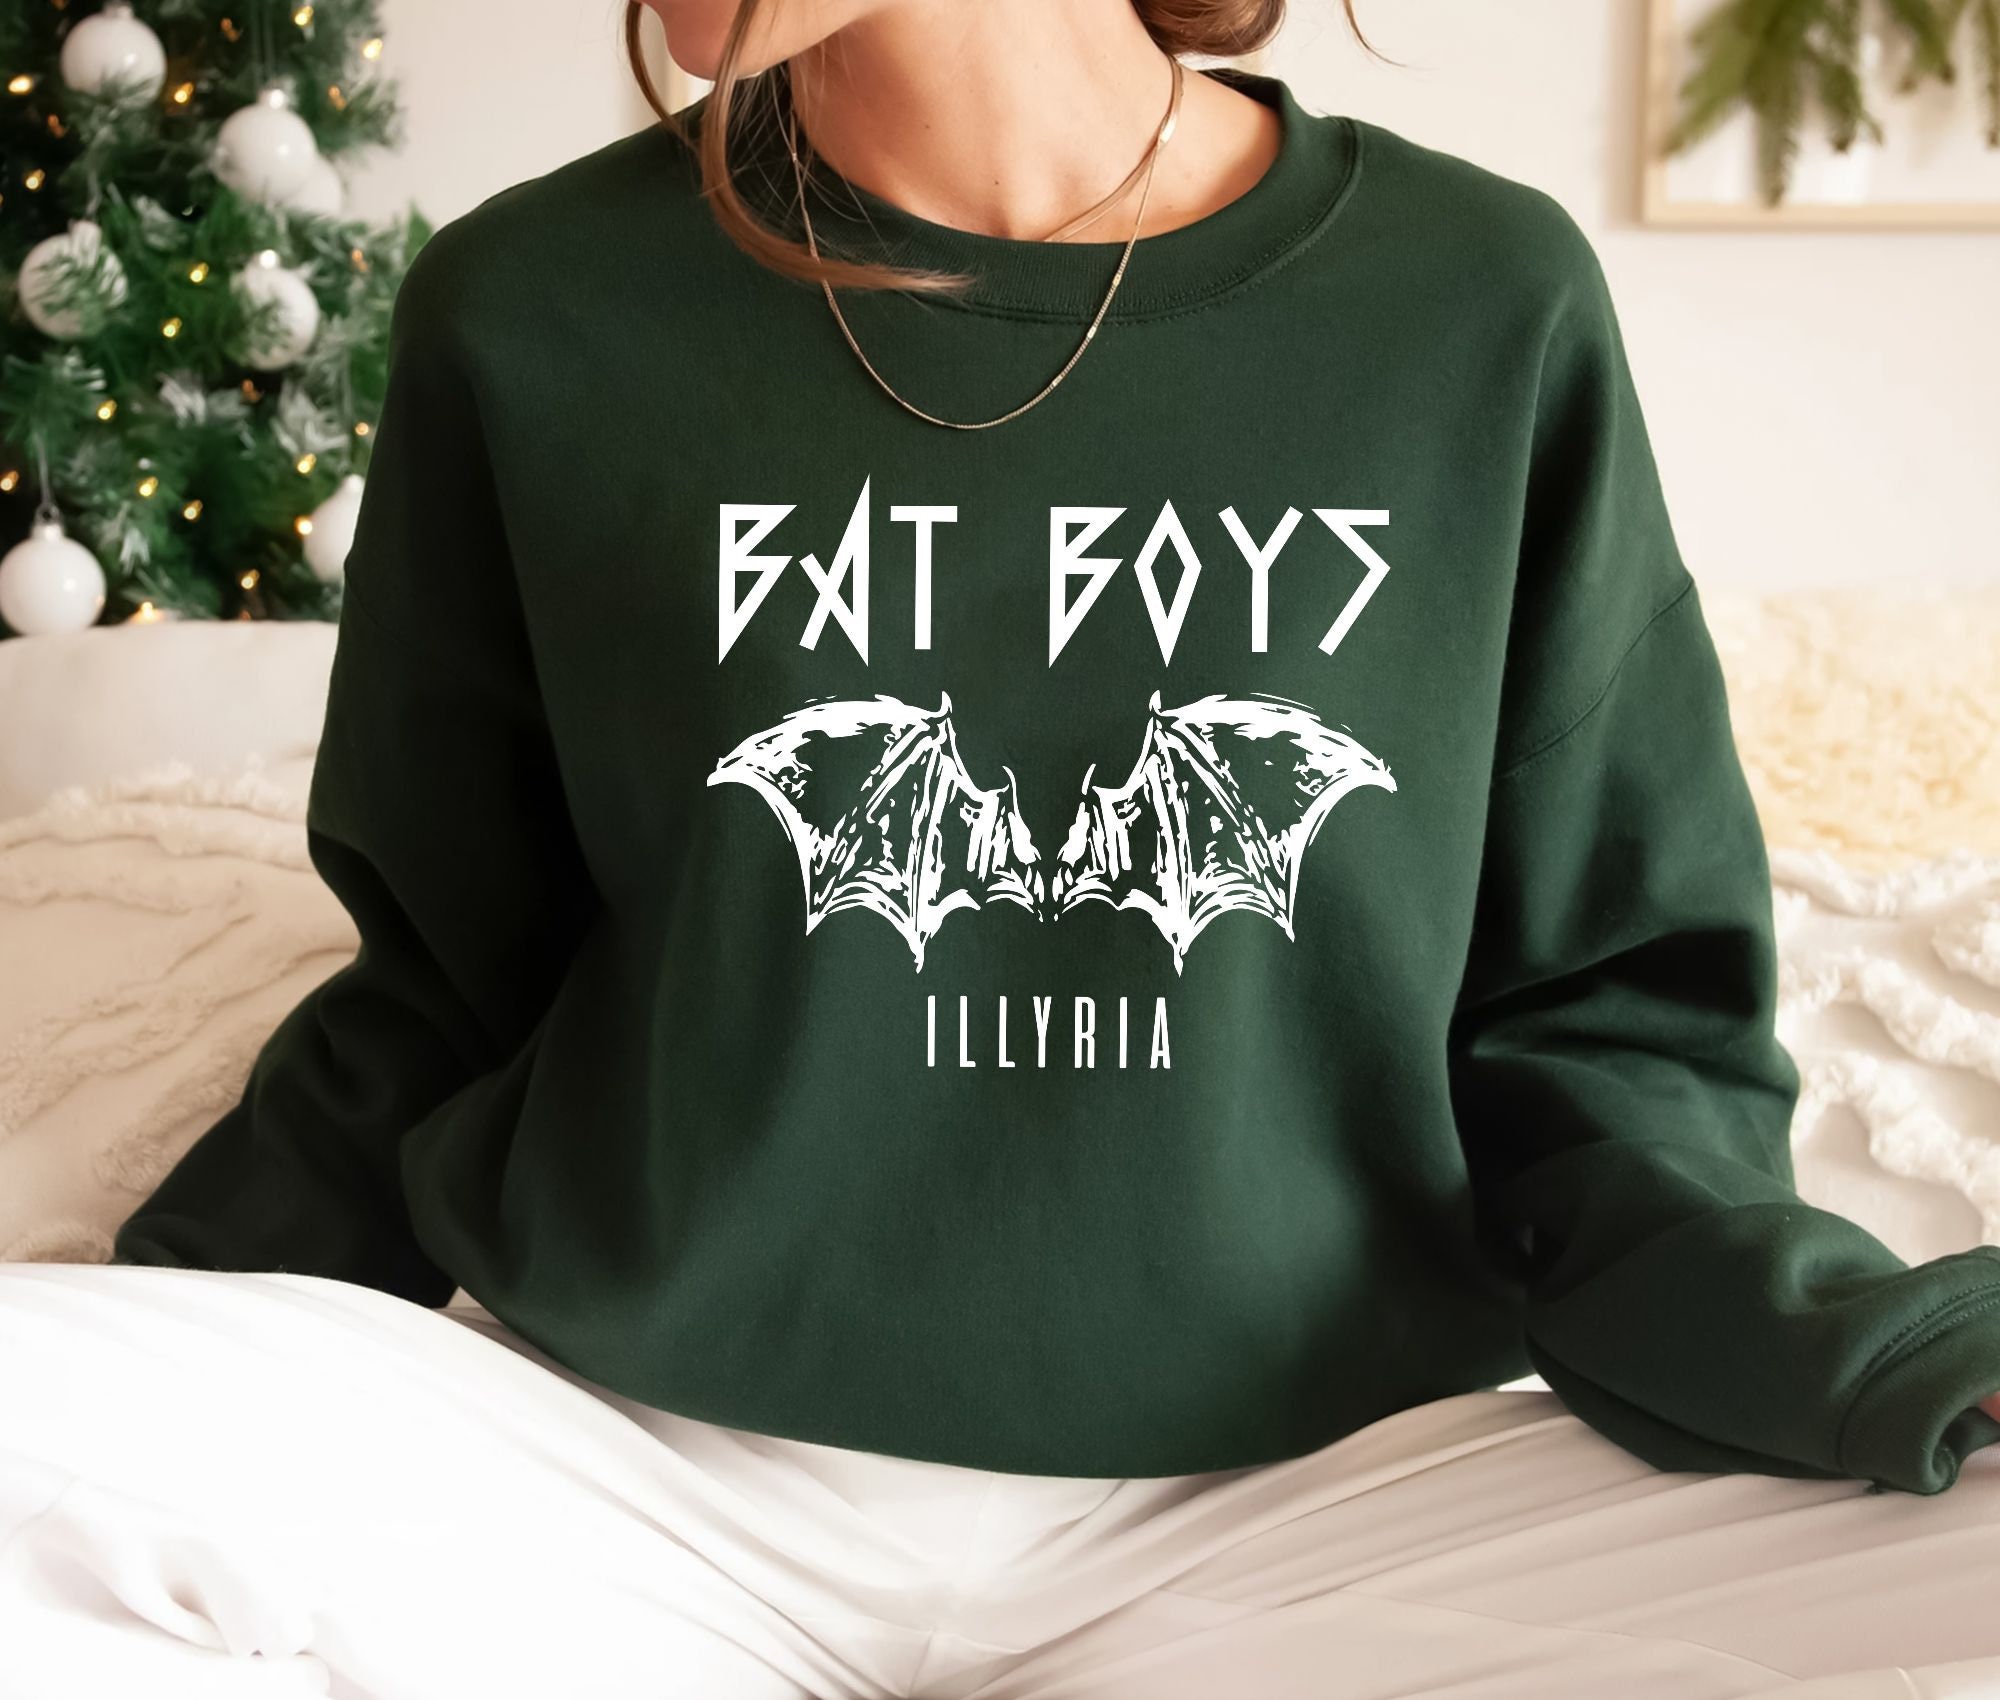 Bat Boys Sweatshirt, Bookish Sweatshirt, Acotar Universe Inspired Wings